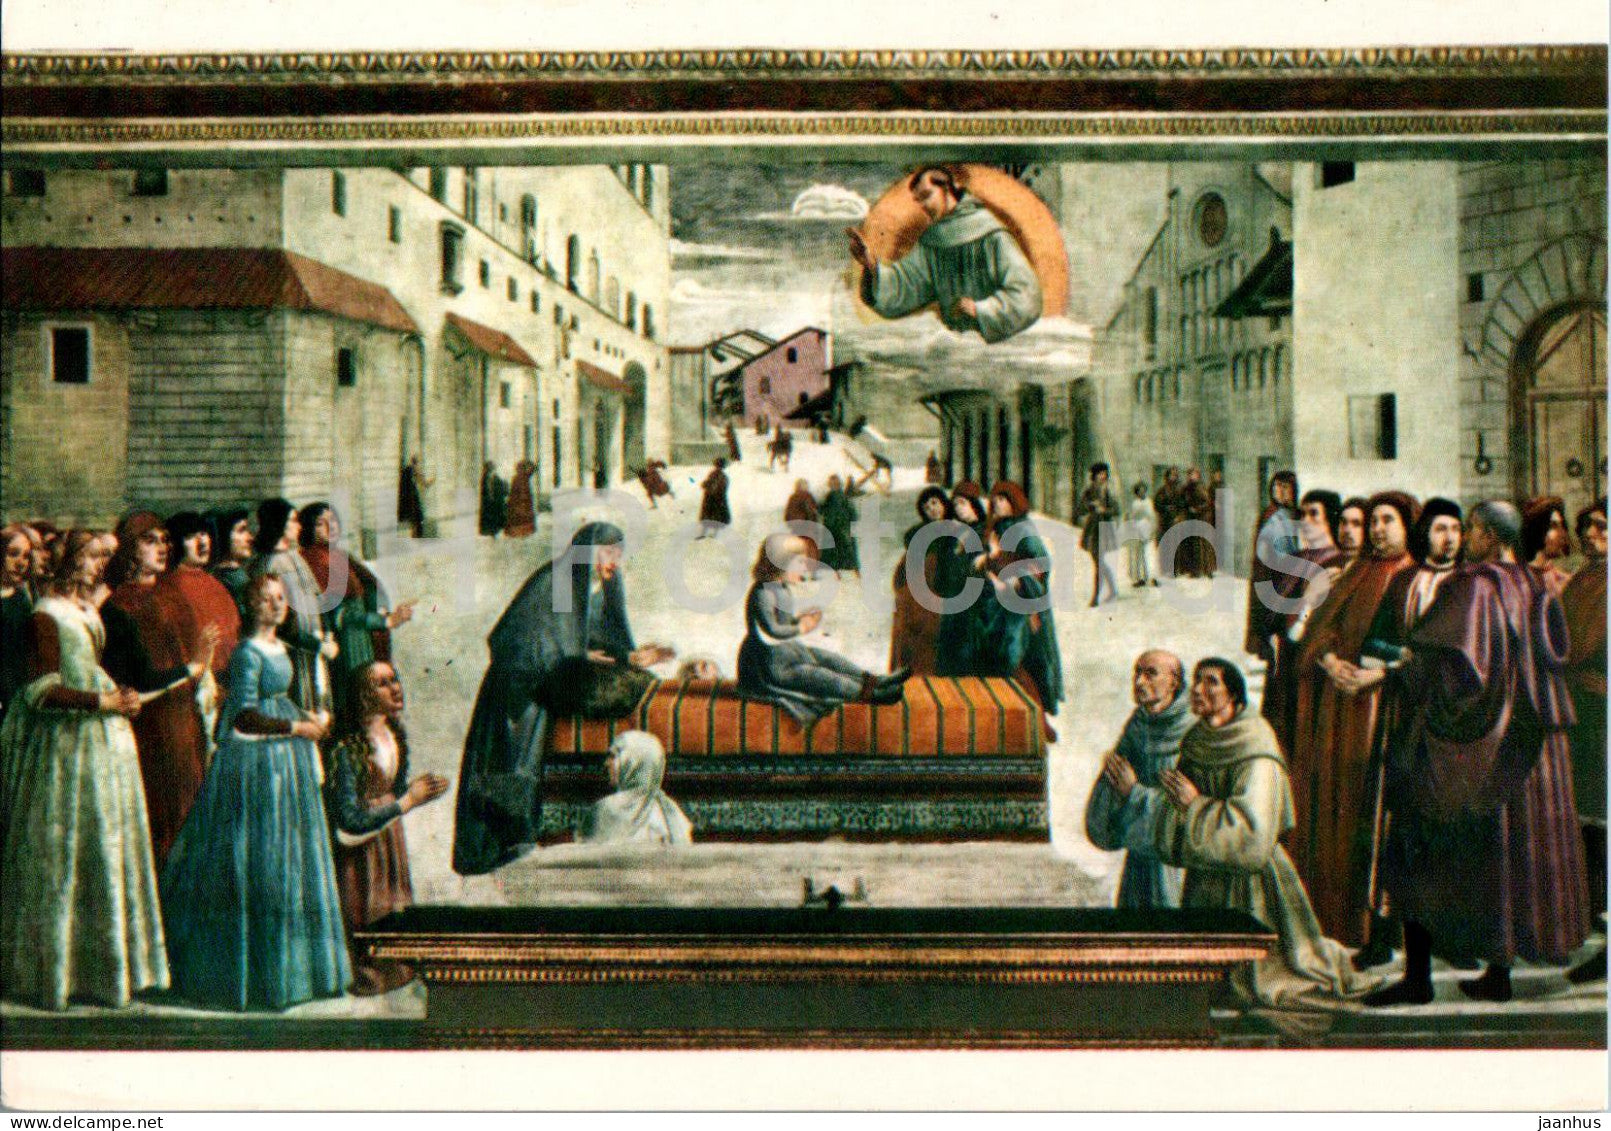 Firenze - Florence - Basilica di S Trinita - D Ghirlandaio - S Francesco - painting - 601 - Italy - used - JH Postcards